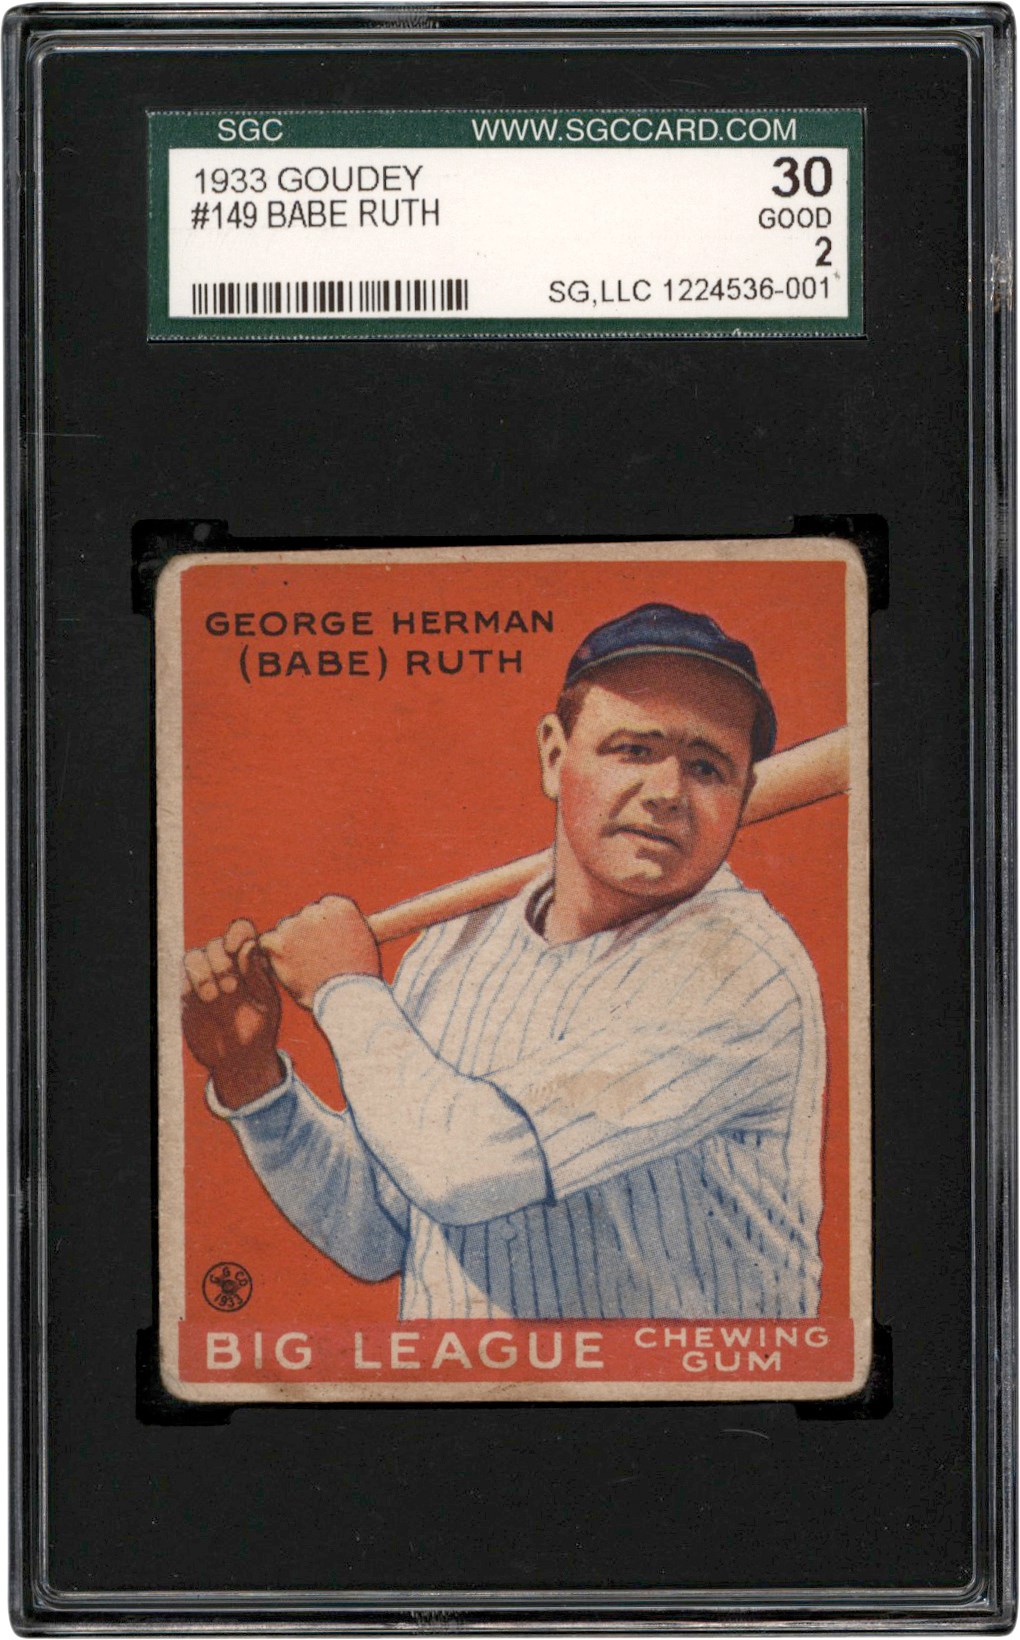 - 33 Goudey Baseball #149 Babe Ruth Card SGC GD 2